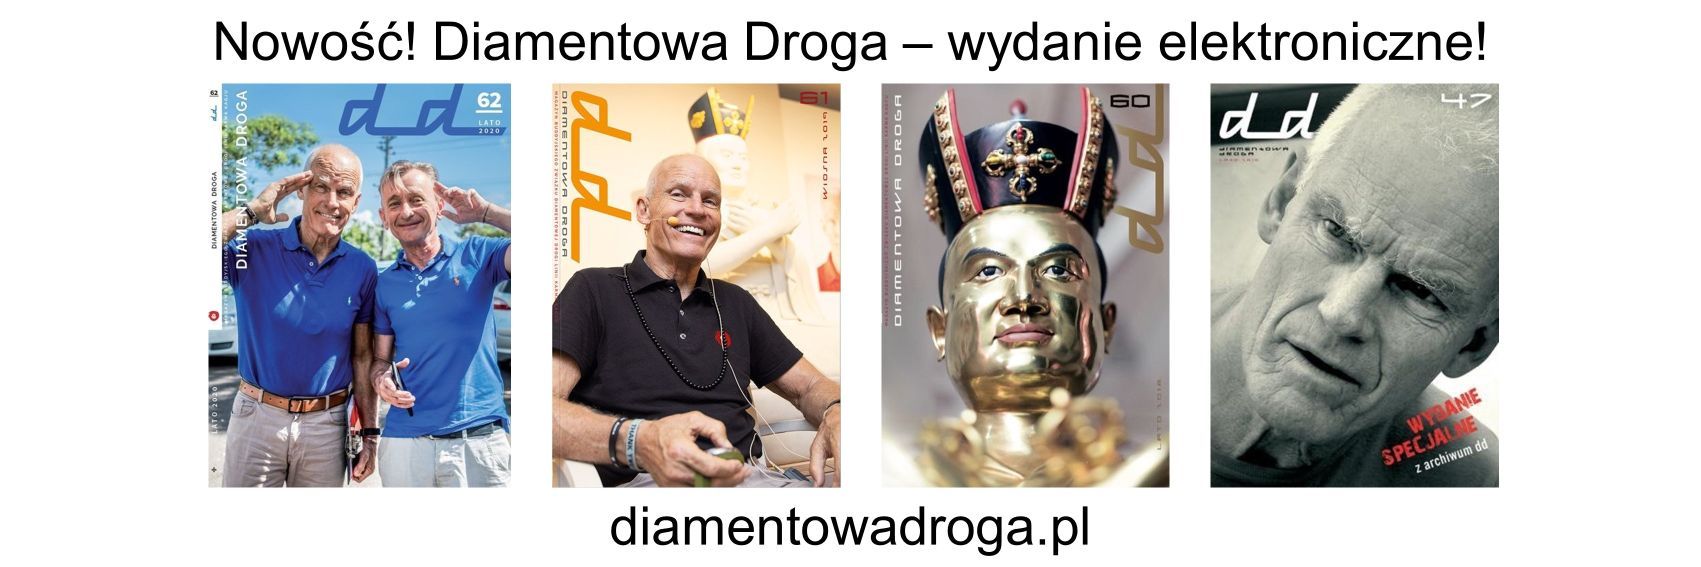 diamentowadroga.pl